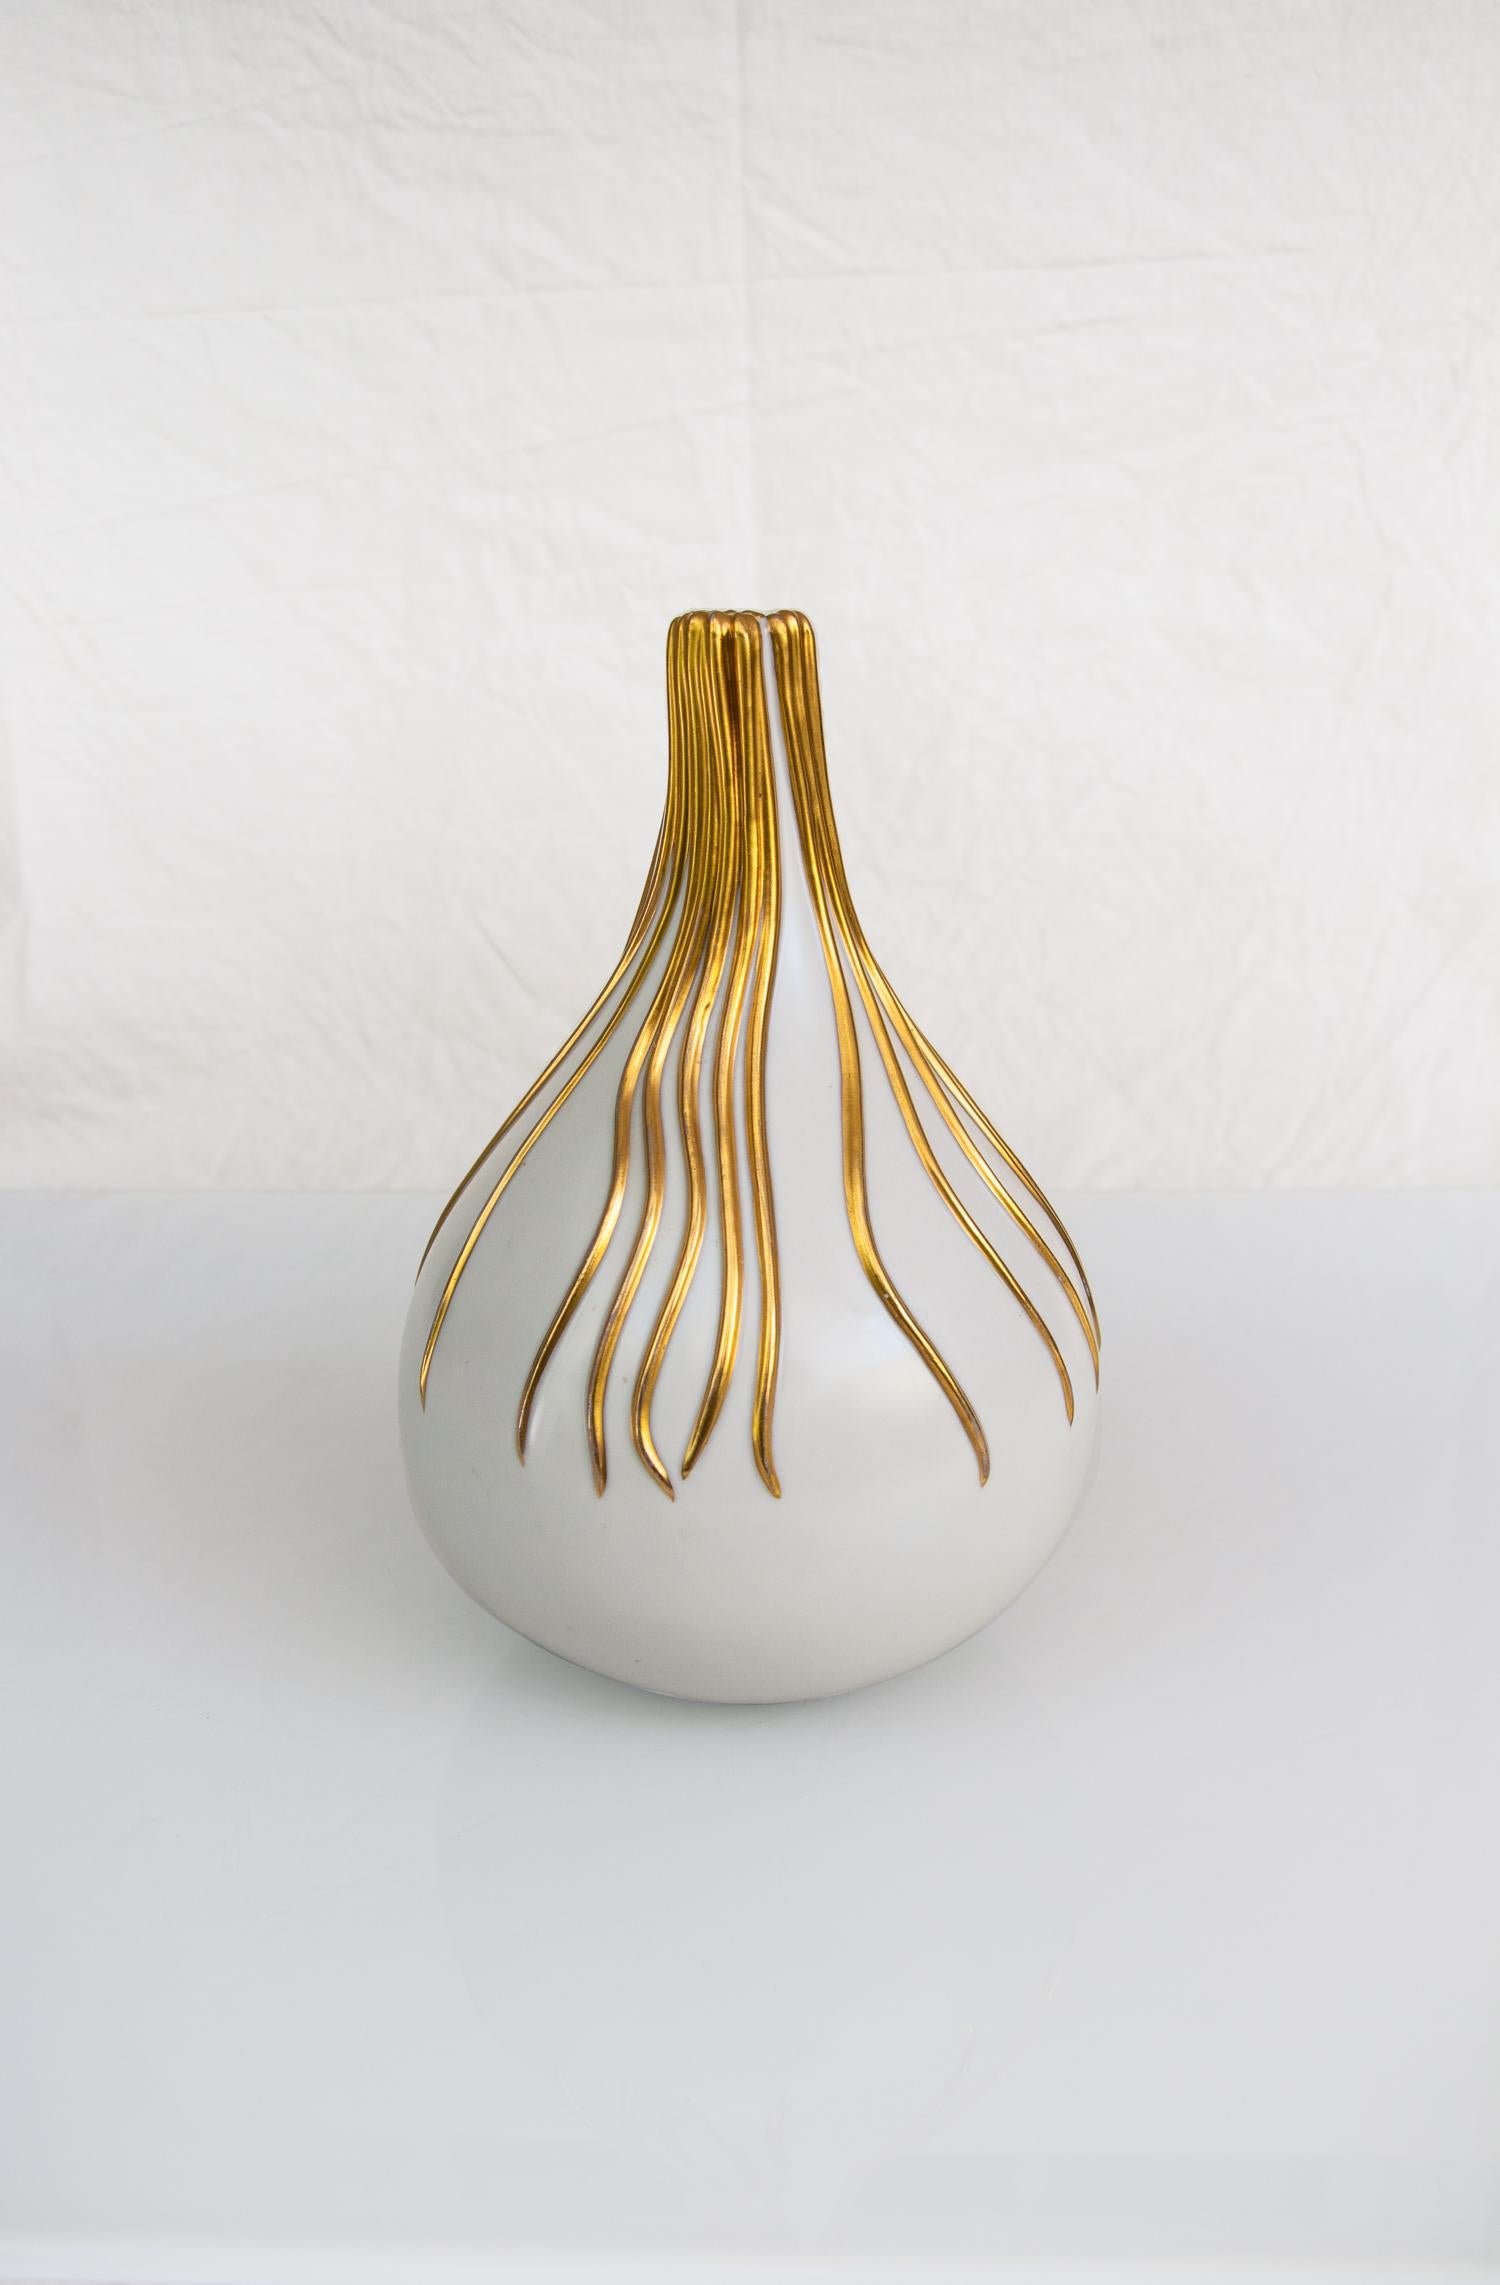 Hand-Crafted Giovanni Gariboldi Ceramic Vase for Richard Ginori San Cristoforo, Italy 1930s For Sale